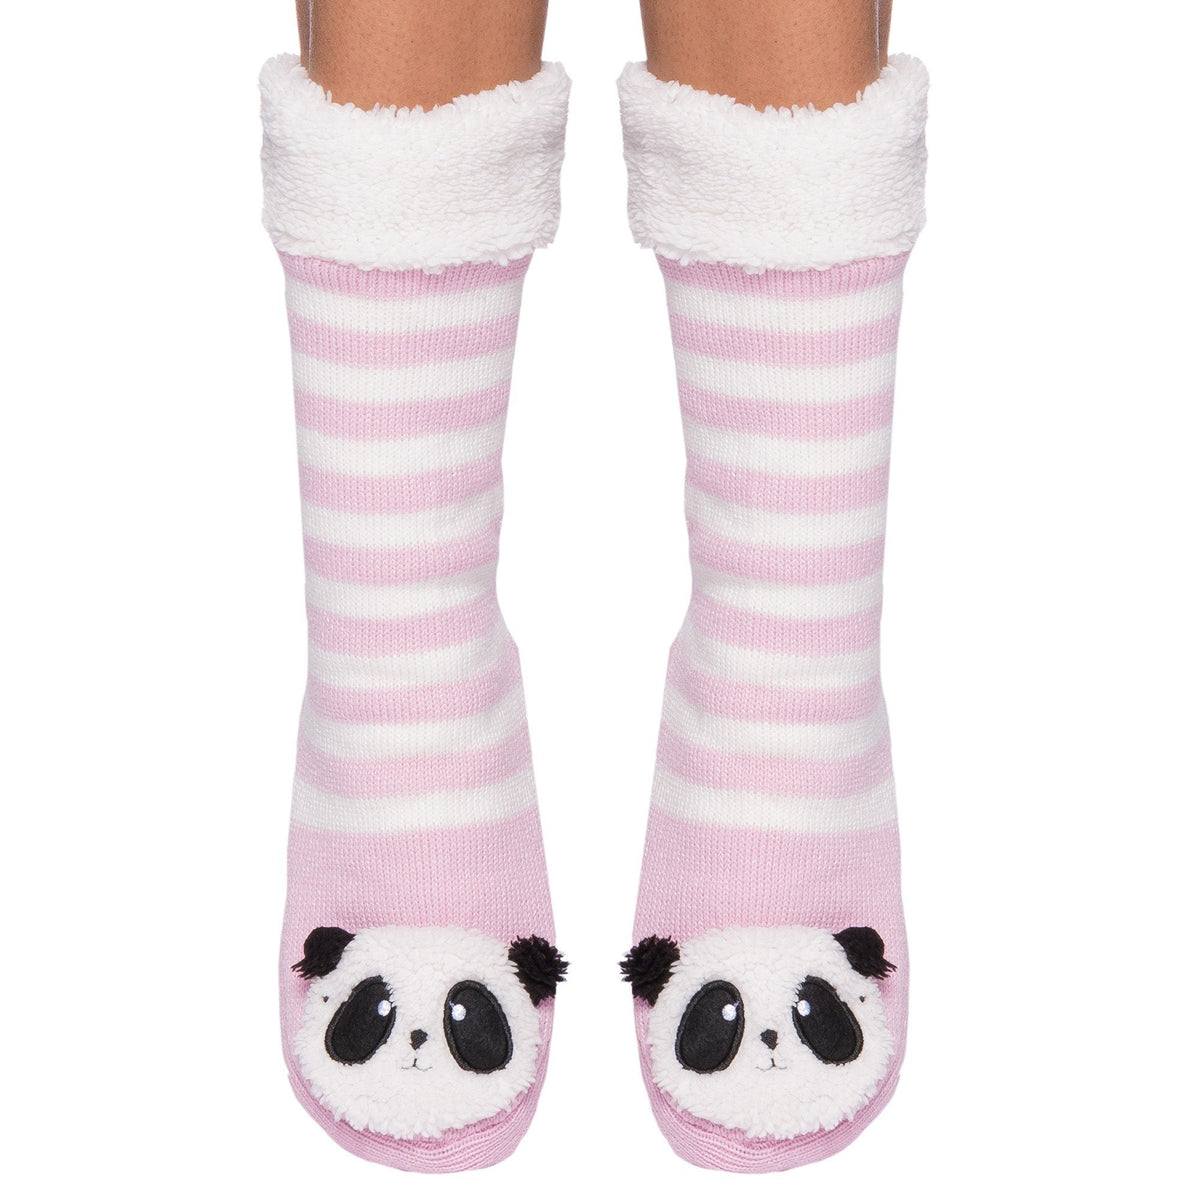 Women's Cute Knit Animal Face Slipper Socks - Panda Pink